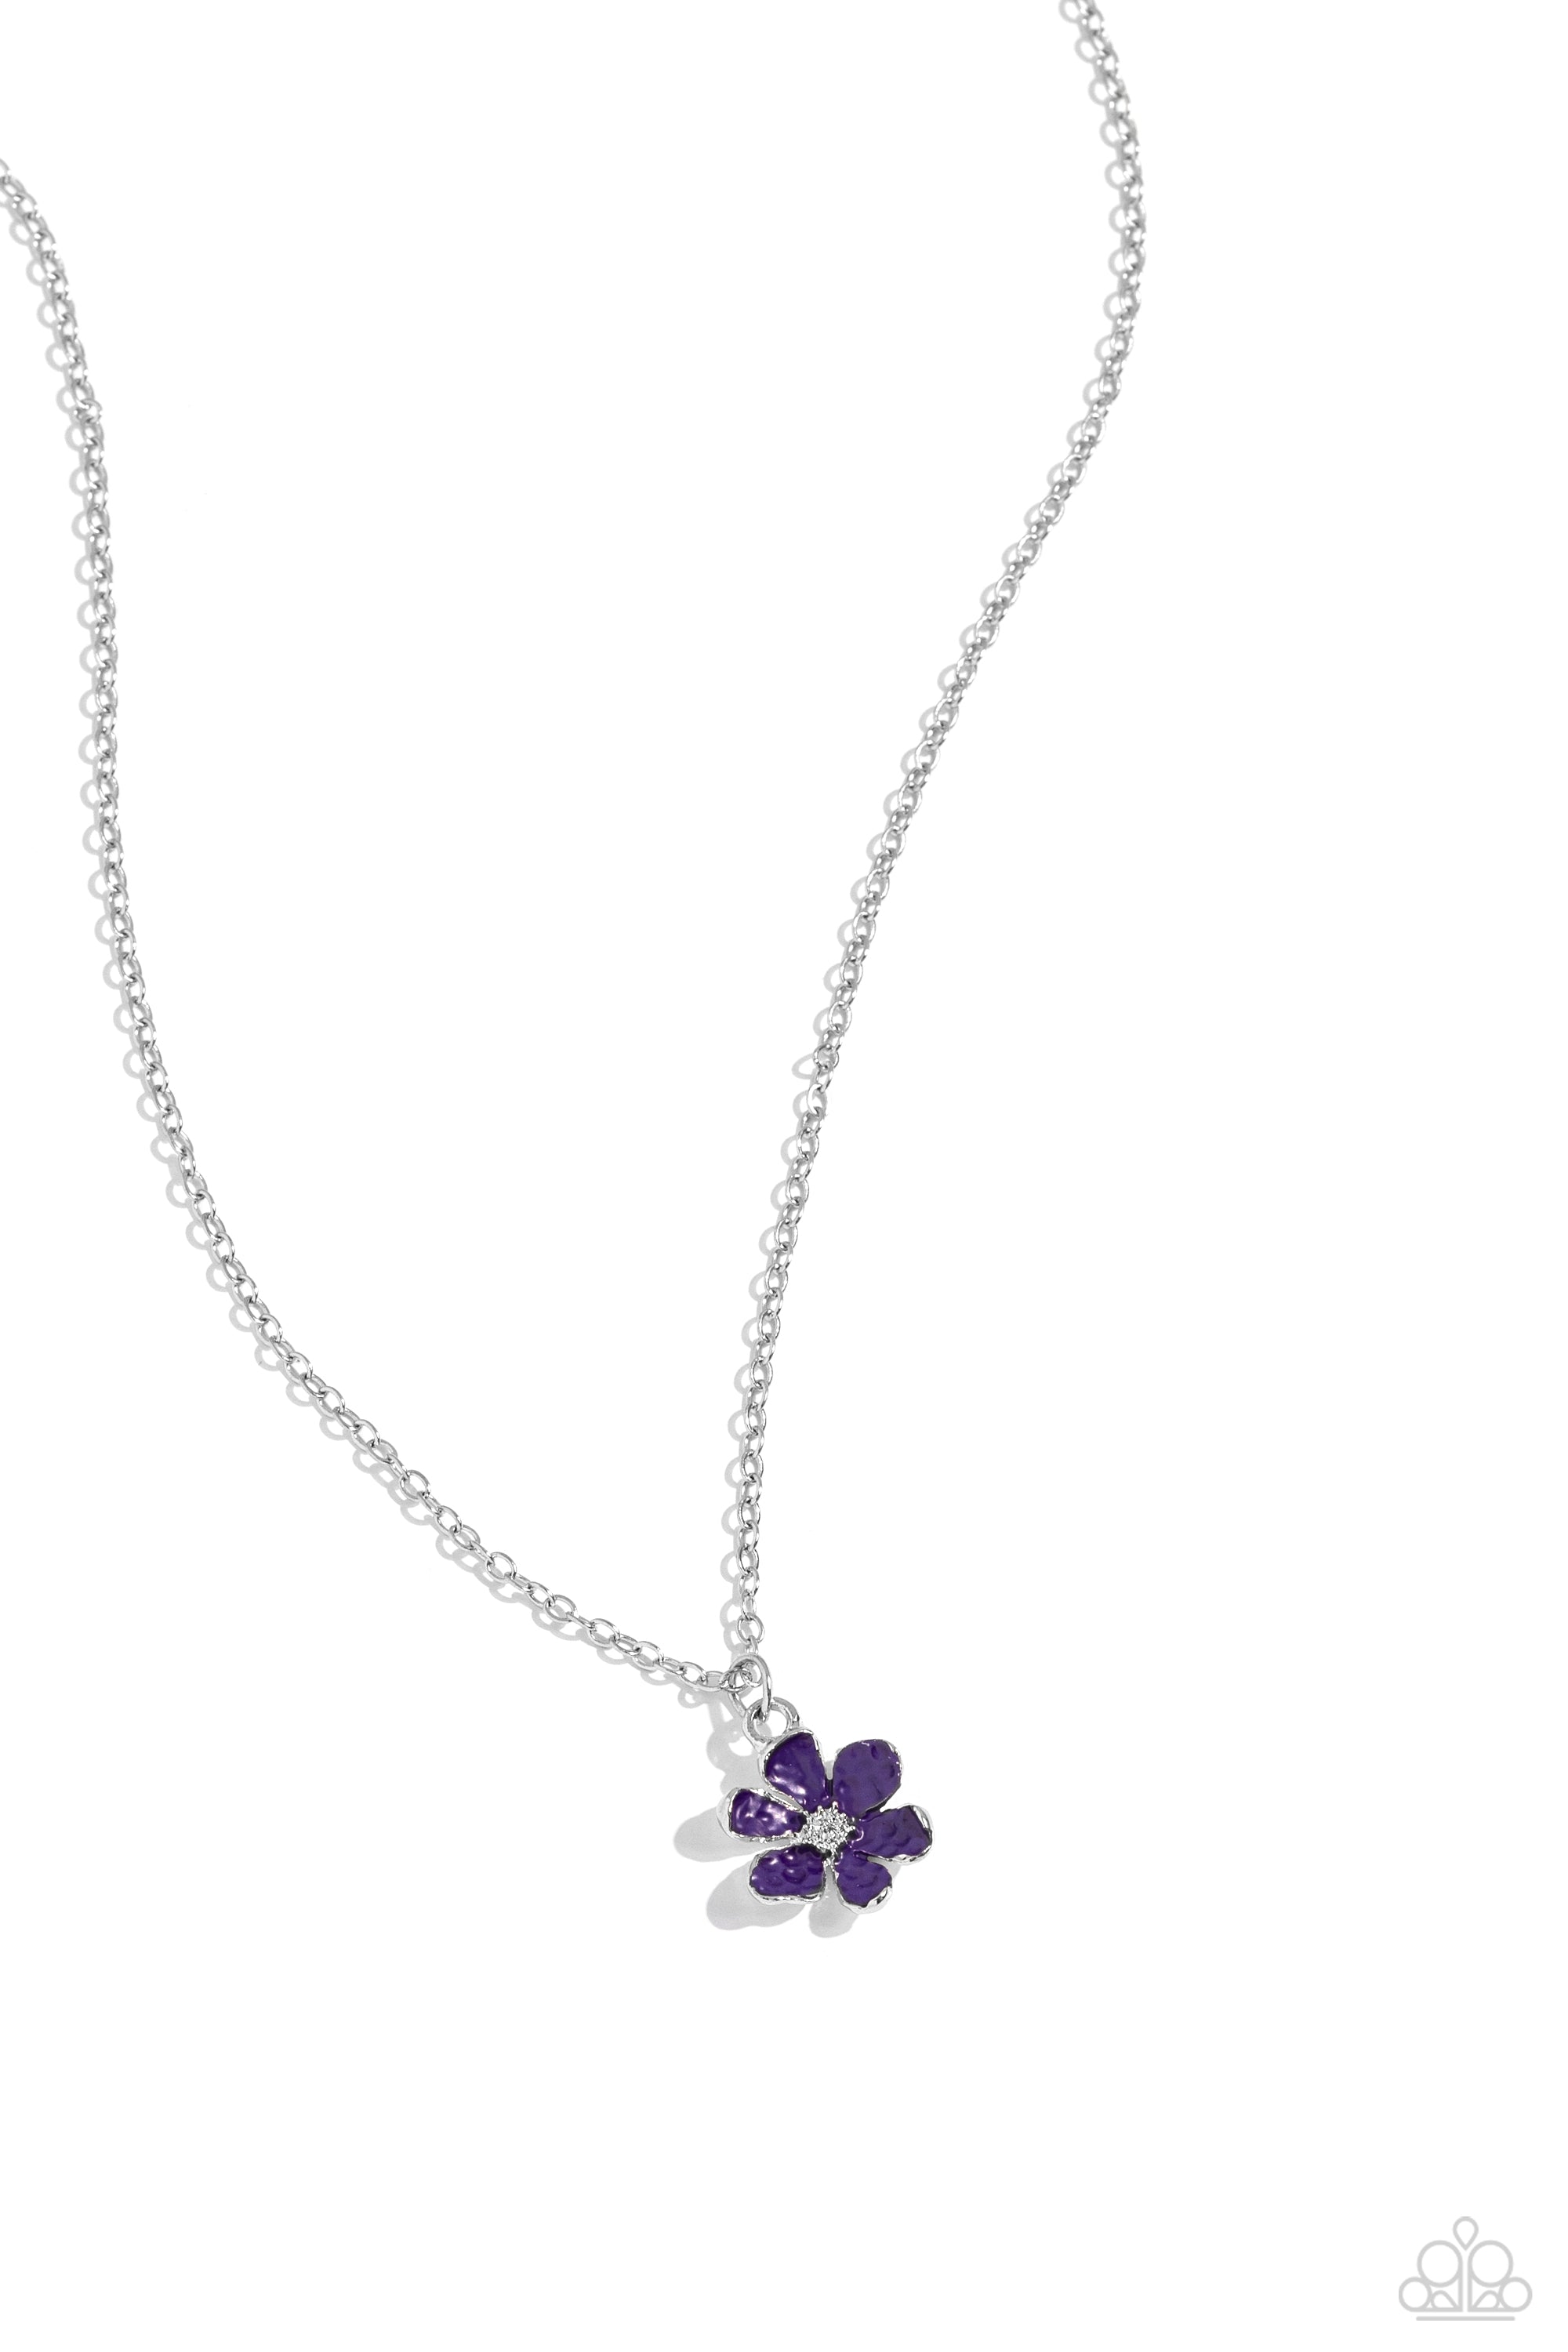 Cottage Retreat Purple Flower Necklace - Paparazzi Accessories- lightbox - CarasShop.com - $5 Jewelry by Cara Jewels